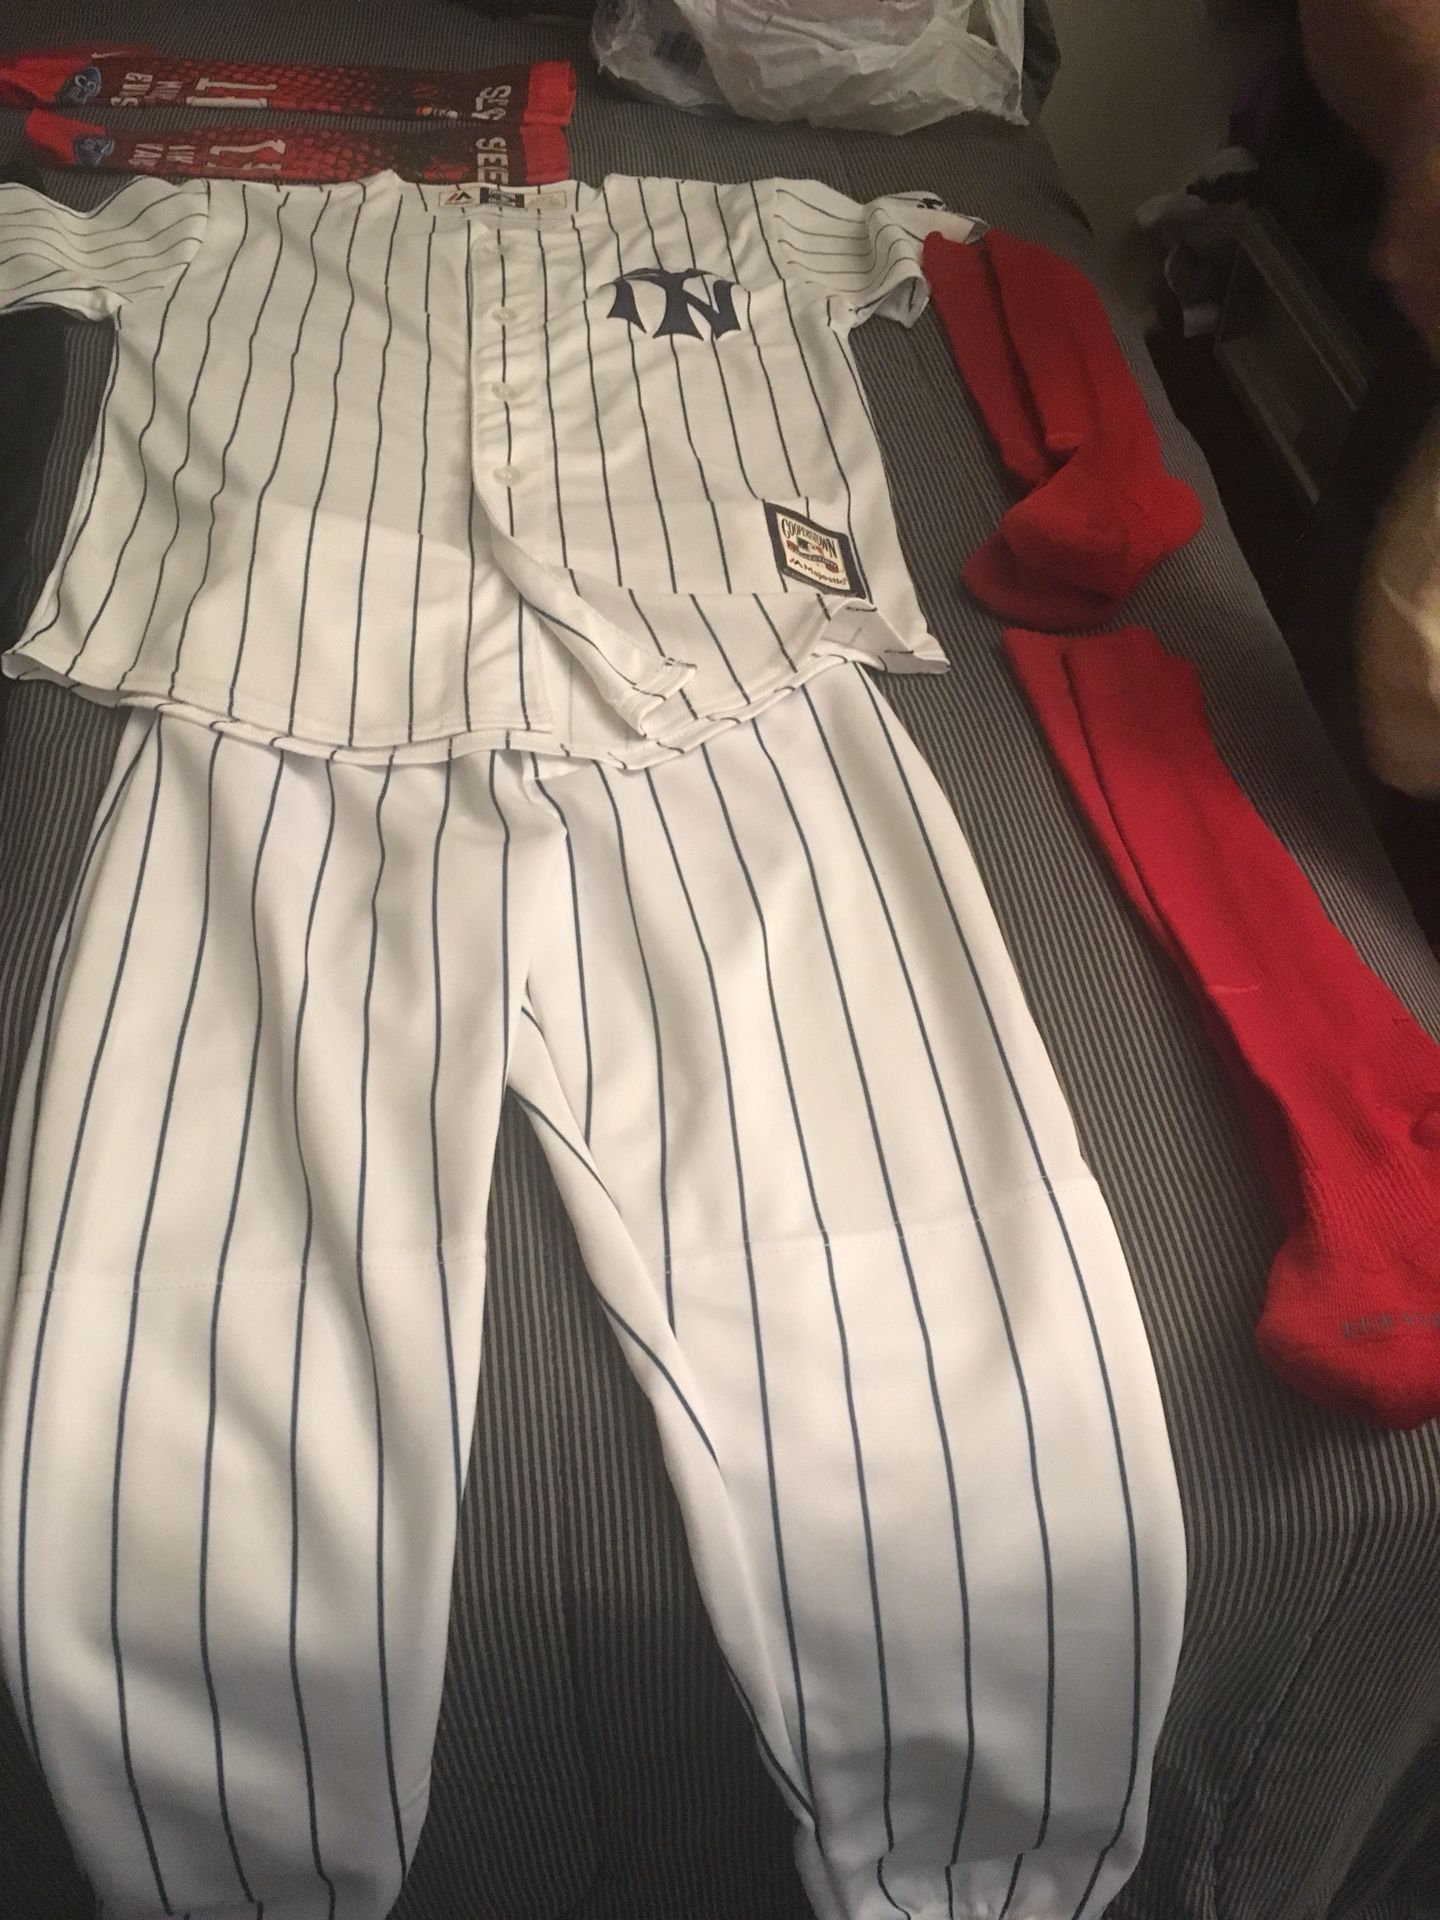 Youth boys baseball clothes, socks arm slip , belt and gloves size medium